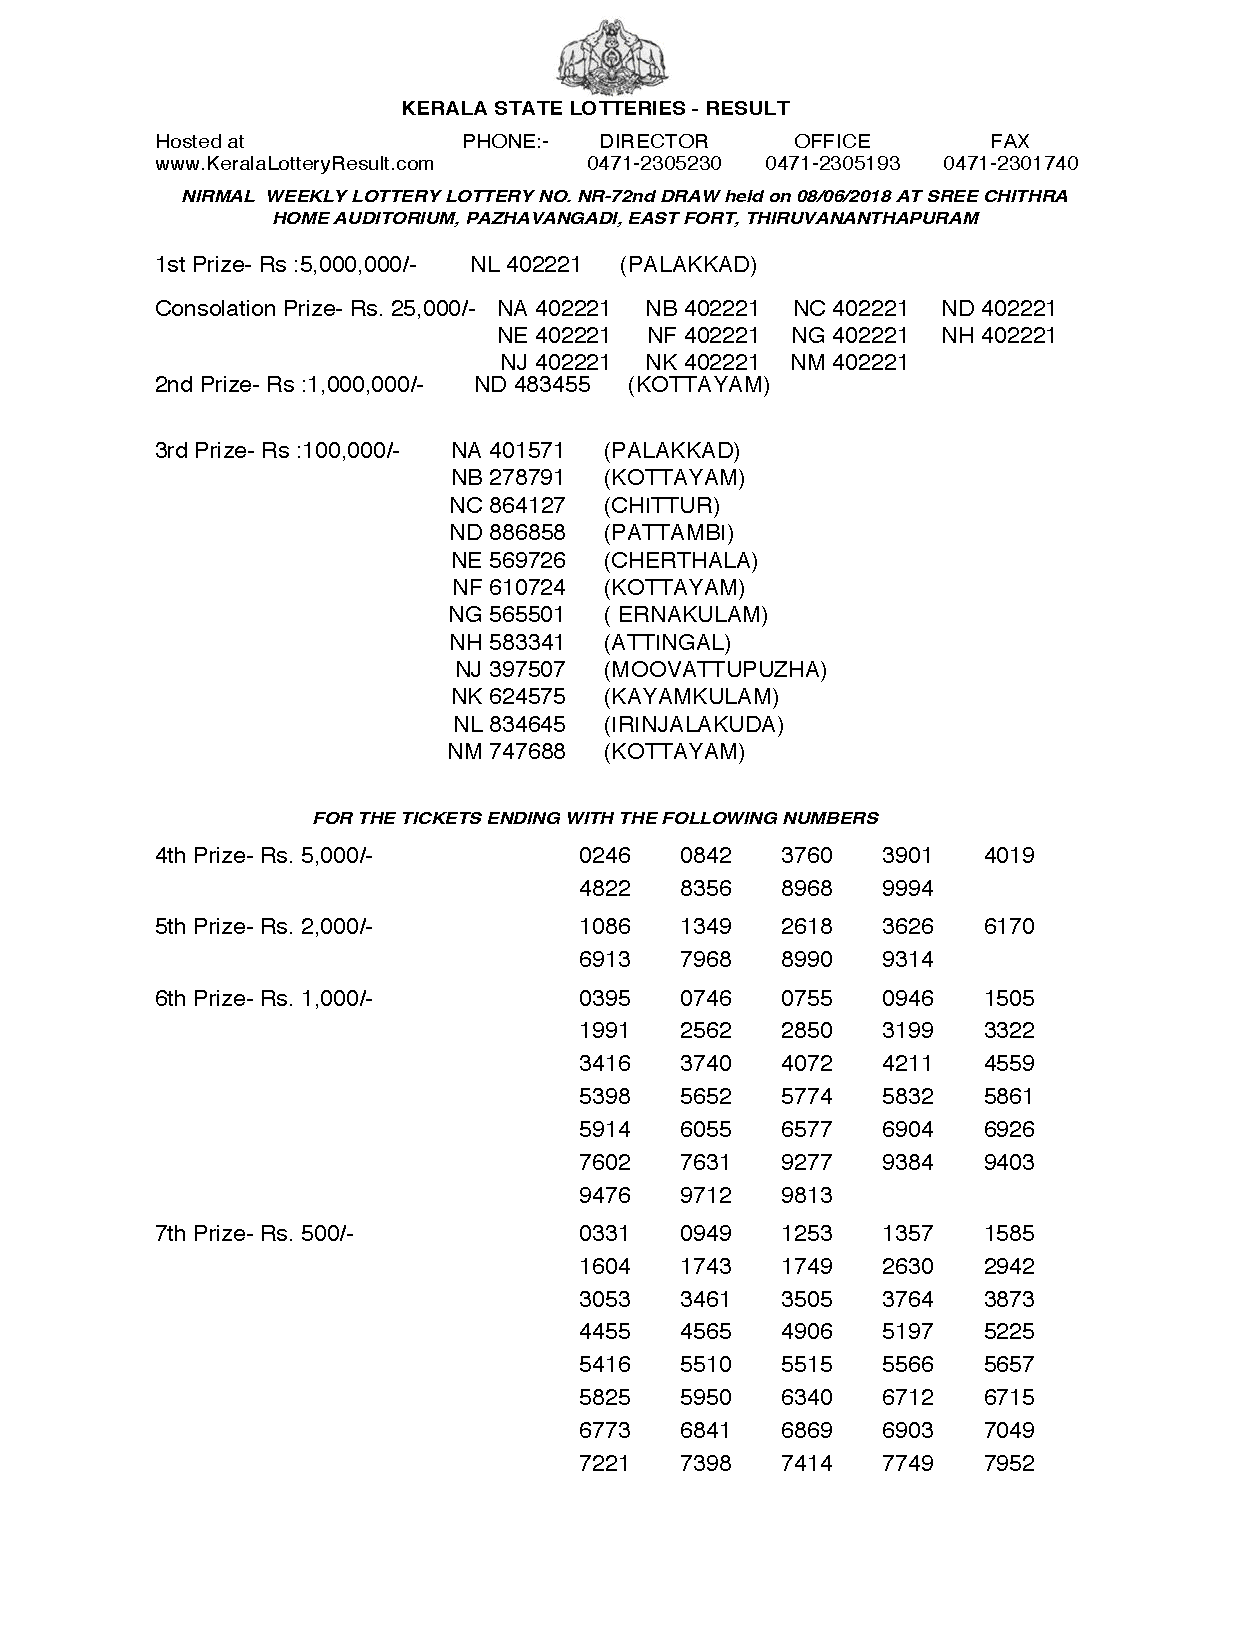 Nirmal NR72 Kerala Lottery Results Screenshot: Page 1